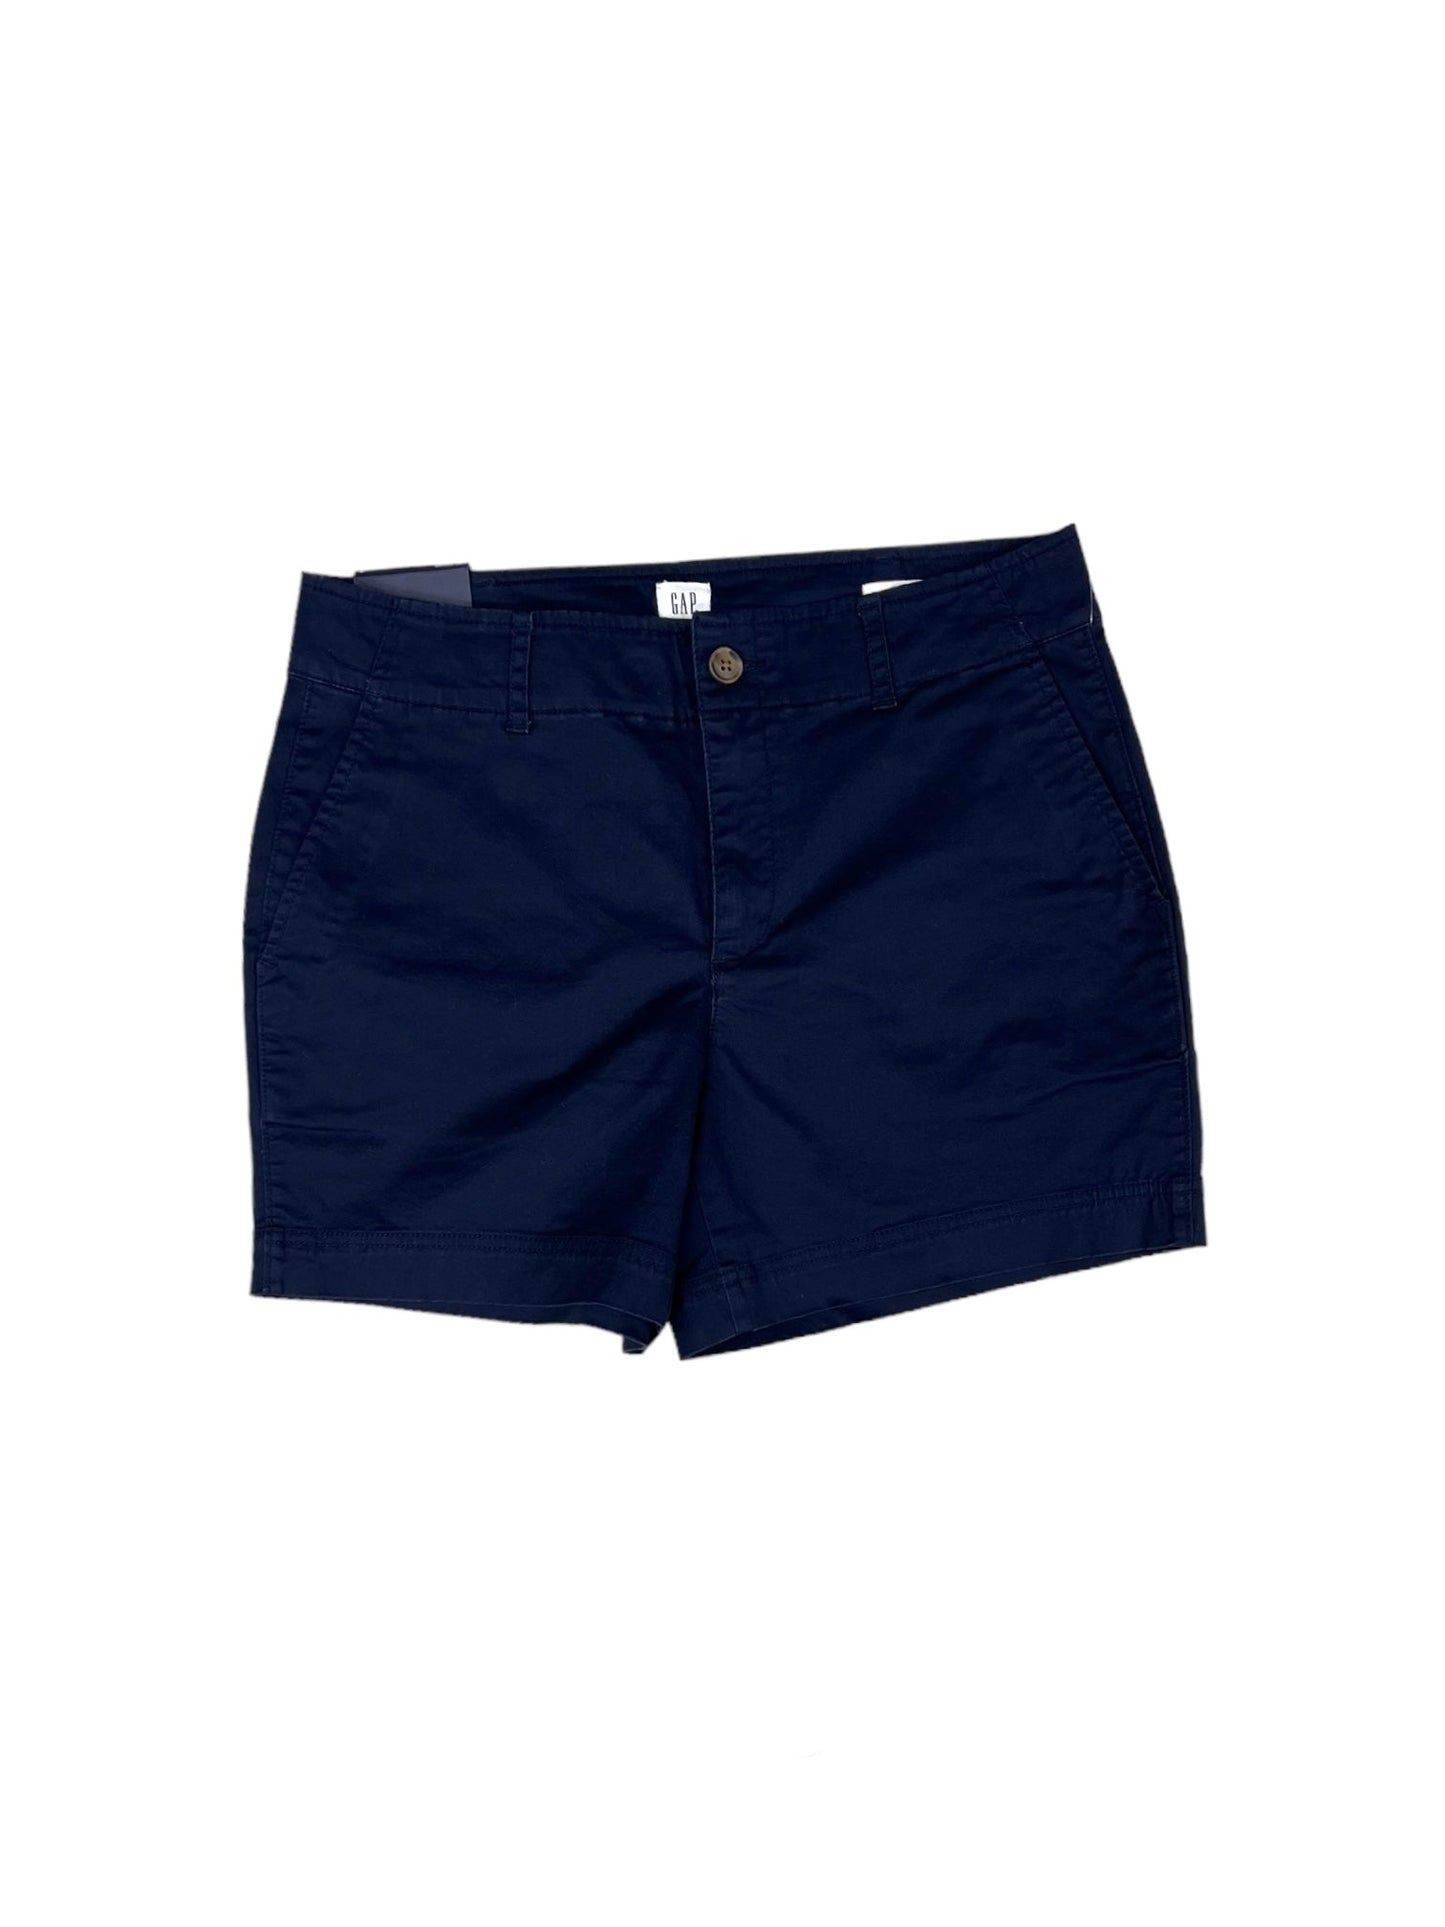 Blue Shorts Gap, Size 6